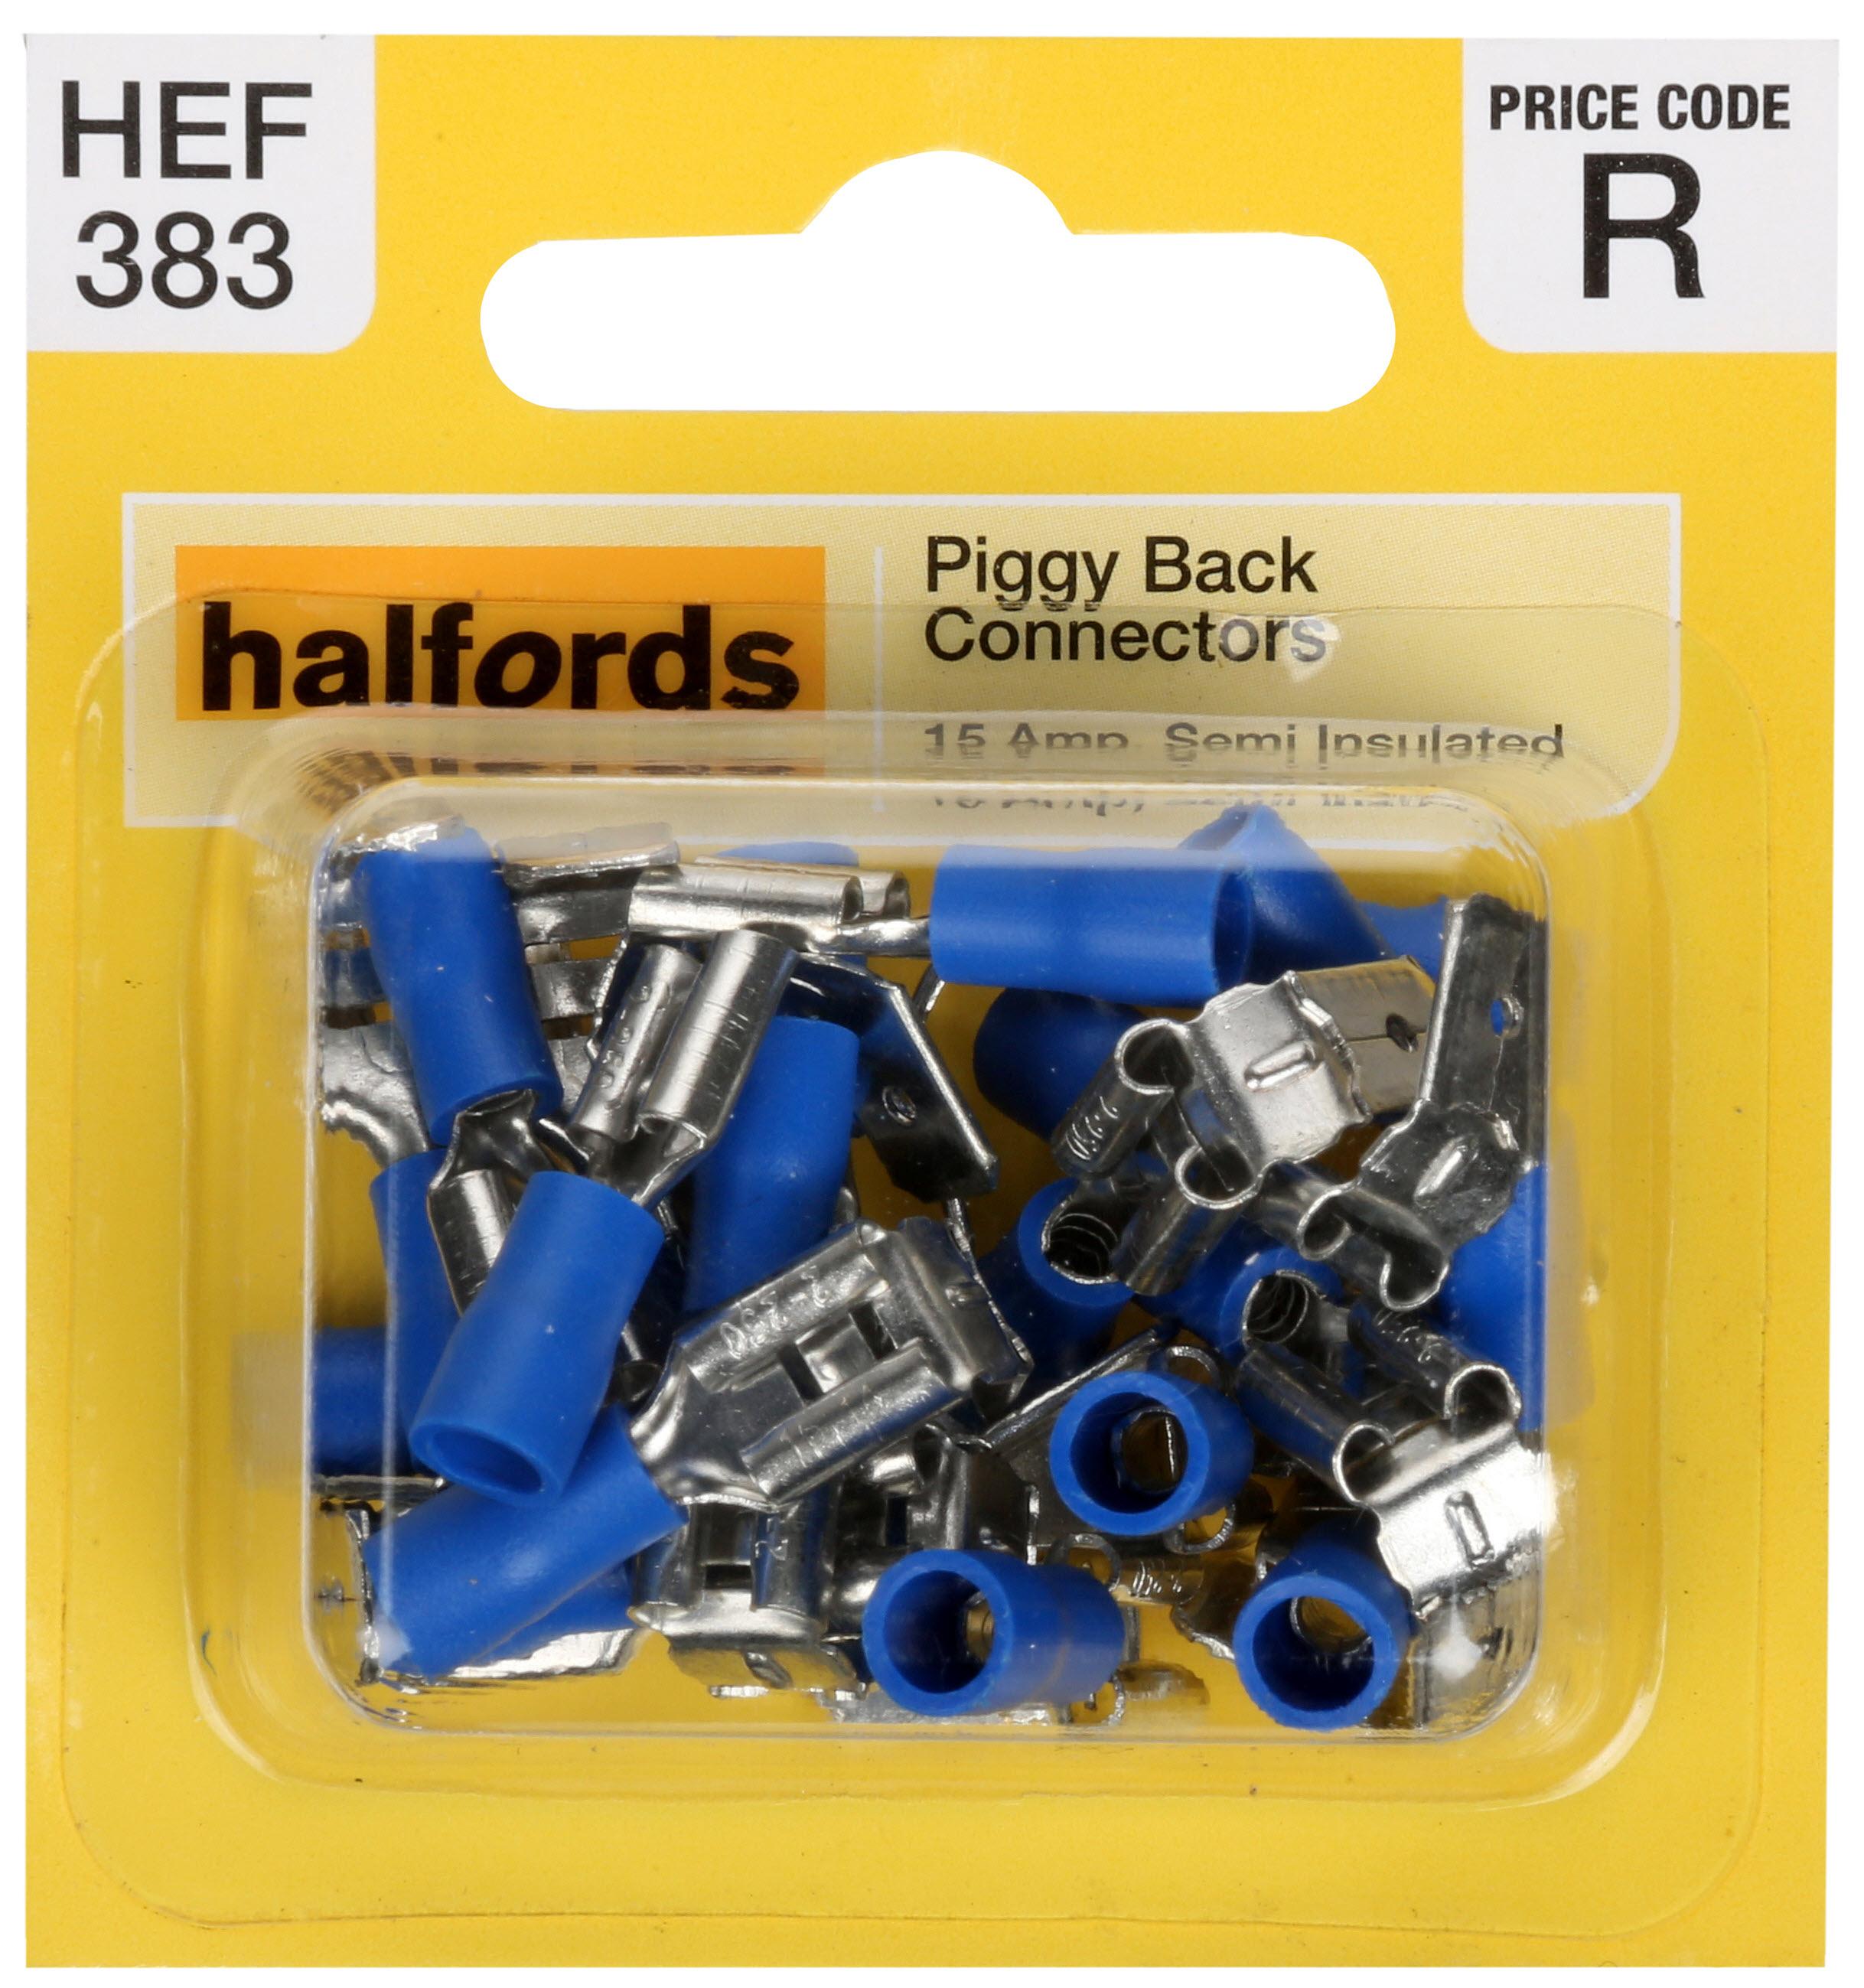 Halfords Piggyback Connectors 15 Amp Semi-Insulated Hef383